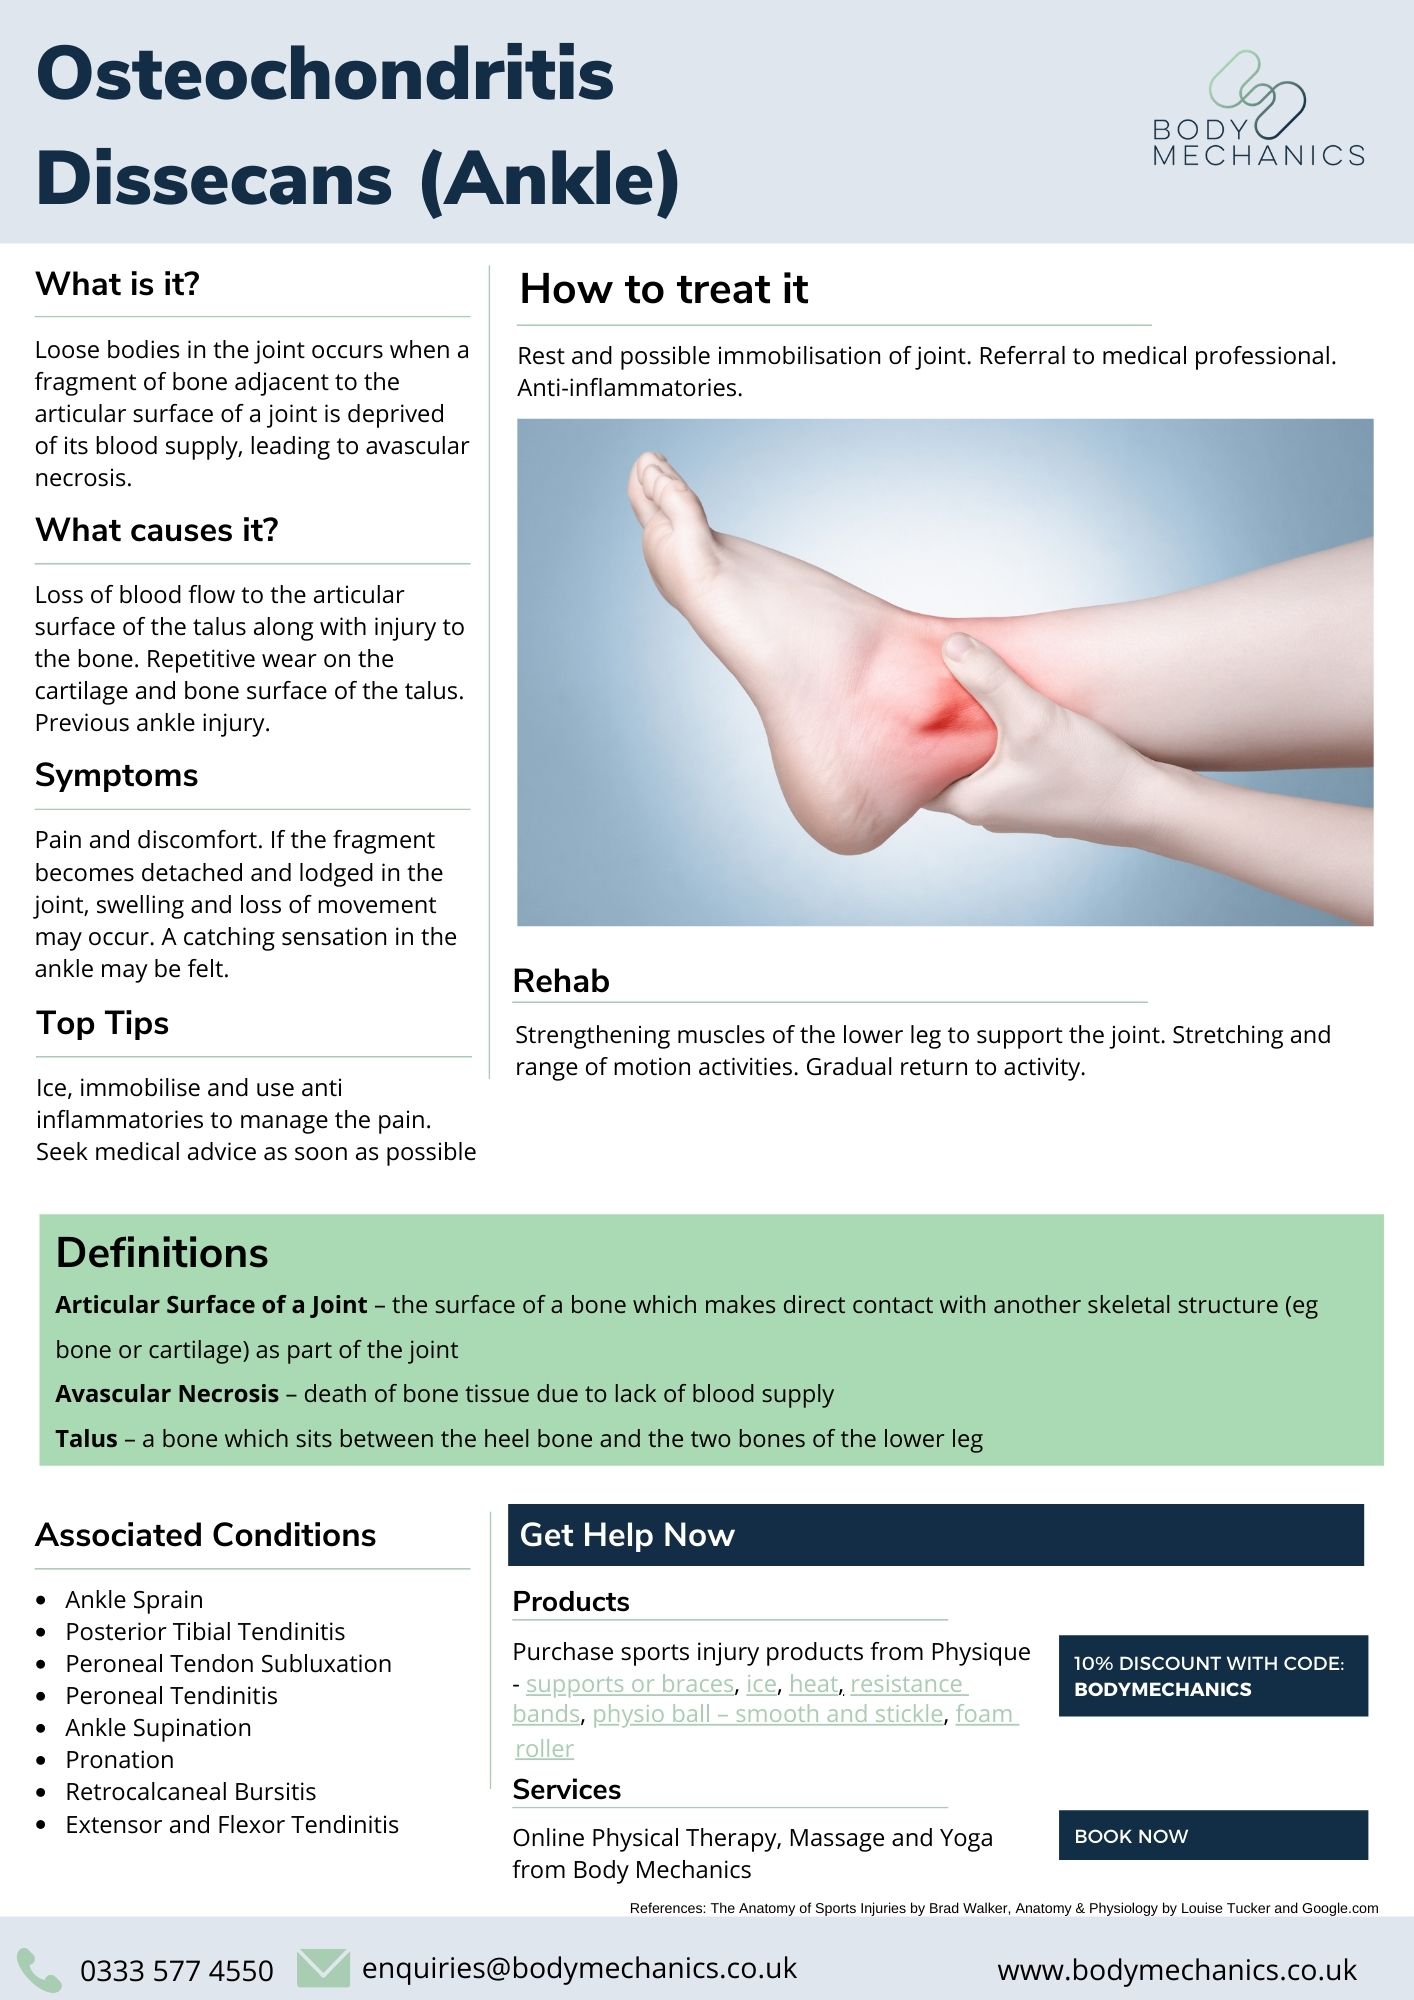 Osteochondritis Dissecans (Ankle) Infosheet